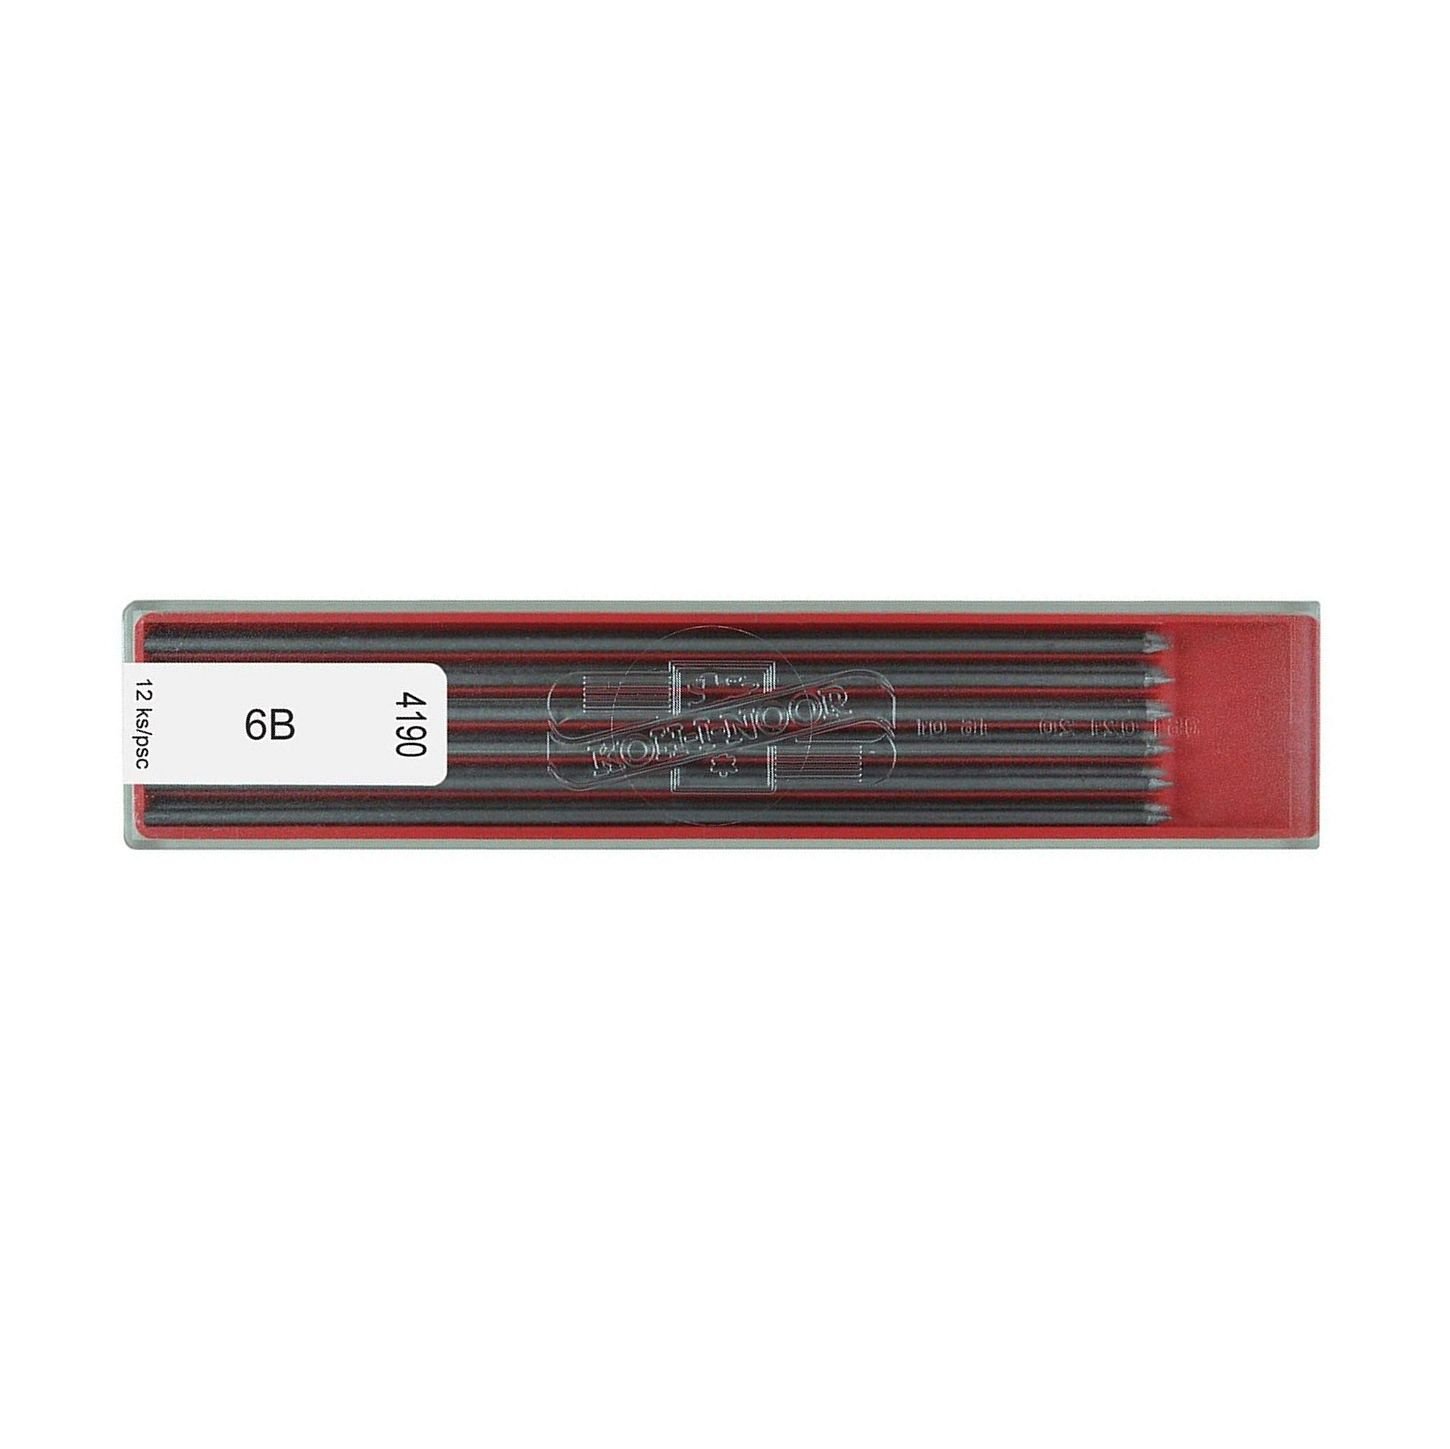 Koh-I-Noor Hardmuth High Quality Graphite Pencil Lead - Grade 6B - Lead Diameter 3.2 mm - Pack of 6